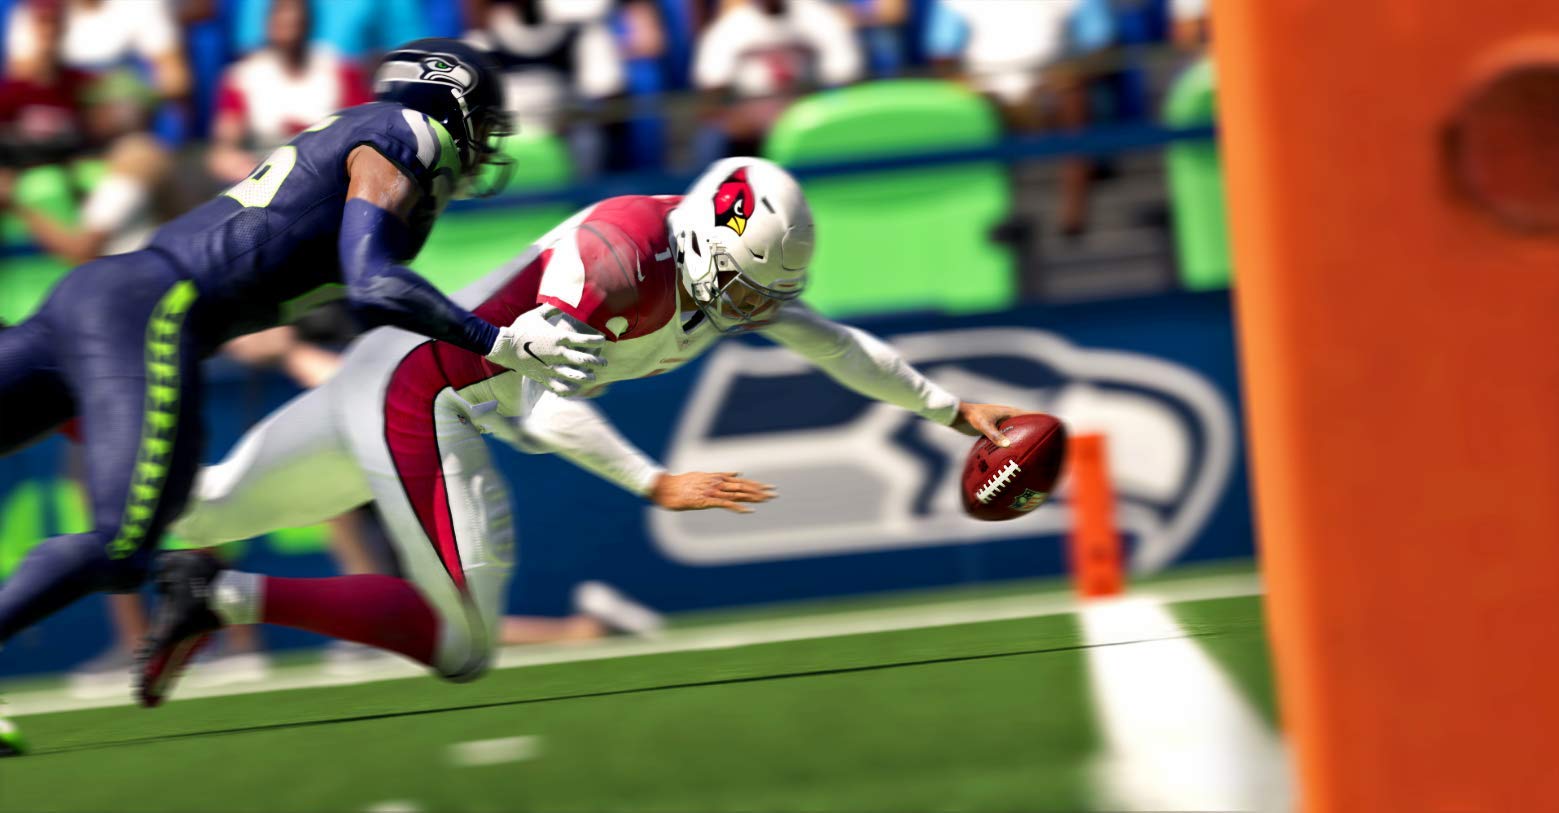 Madden NFL 21 Standard - Origin PC [Online Game Code]